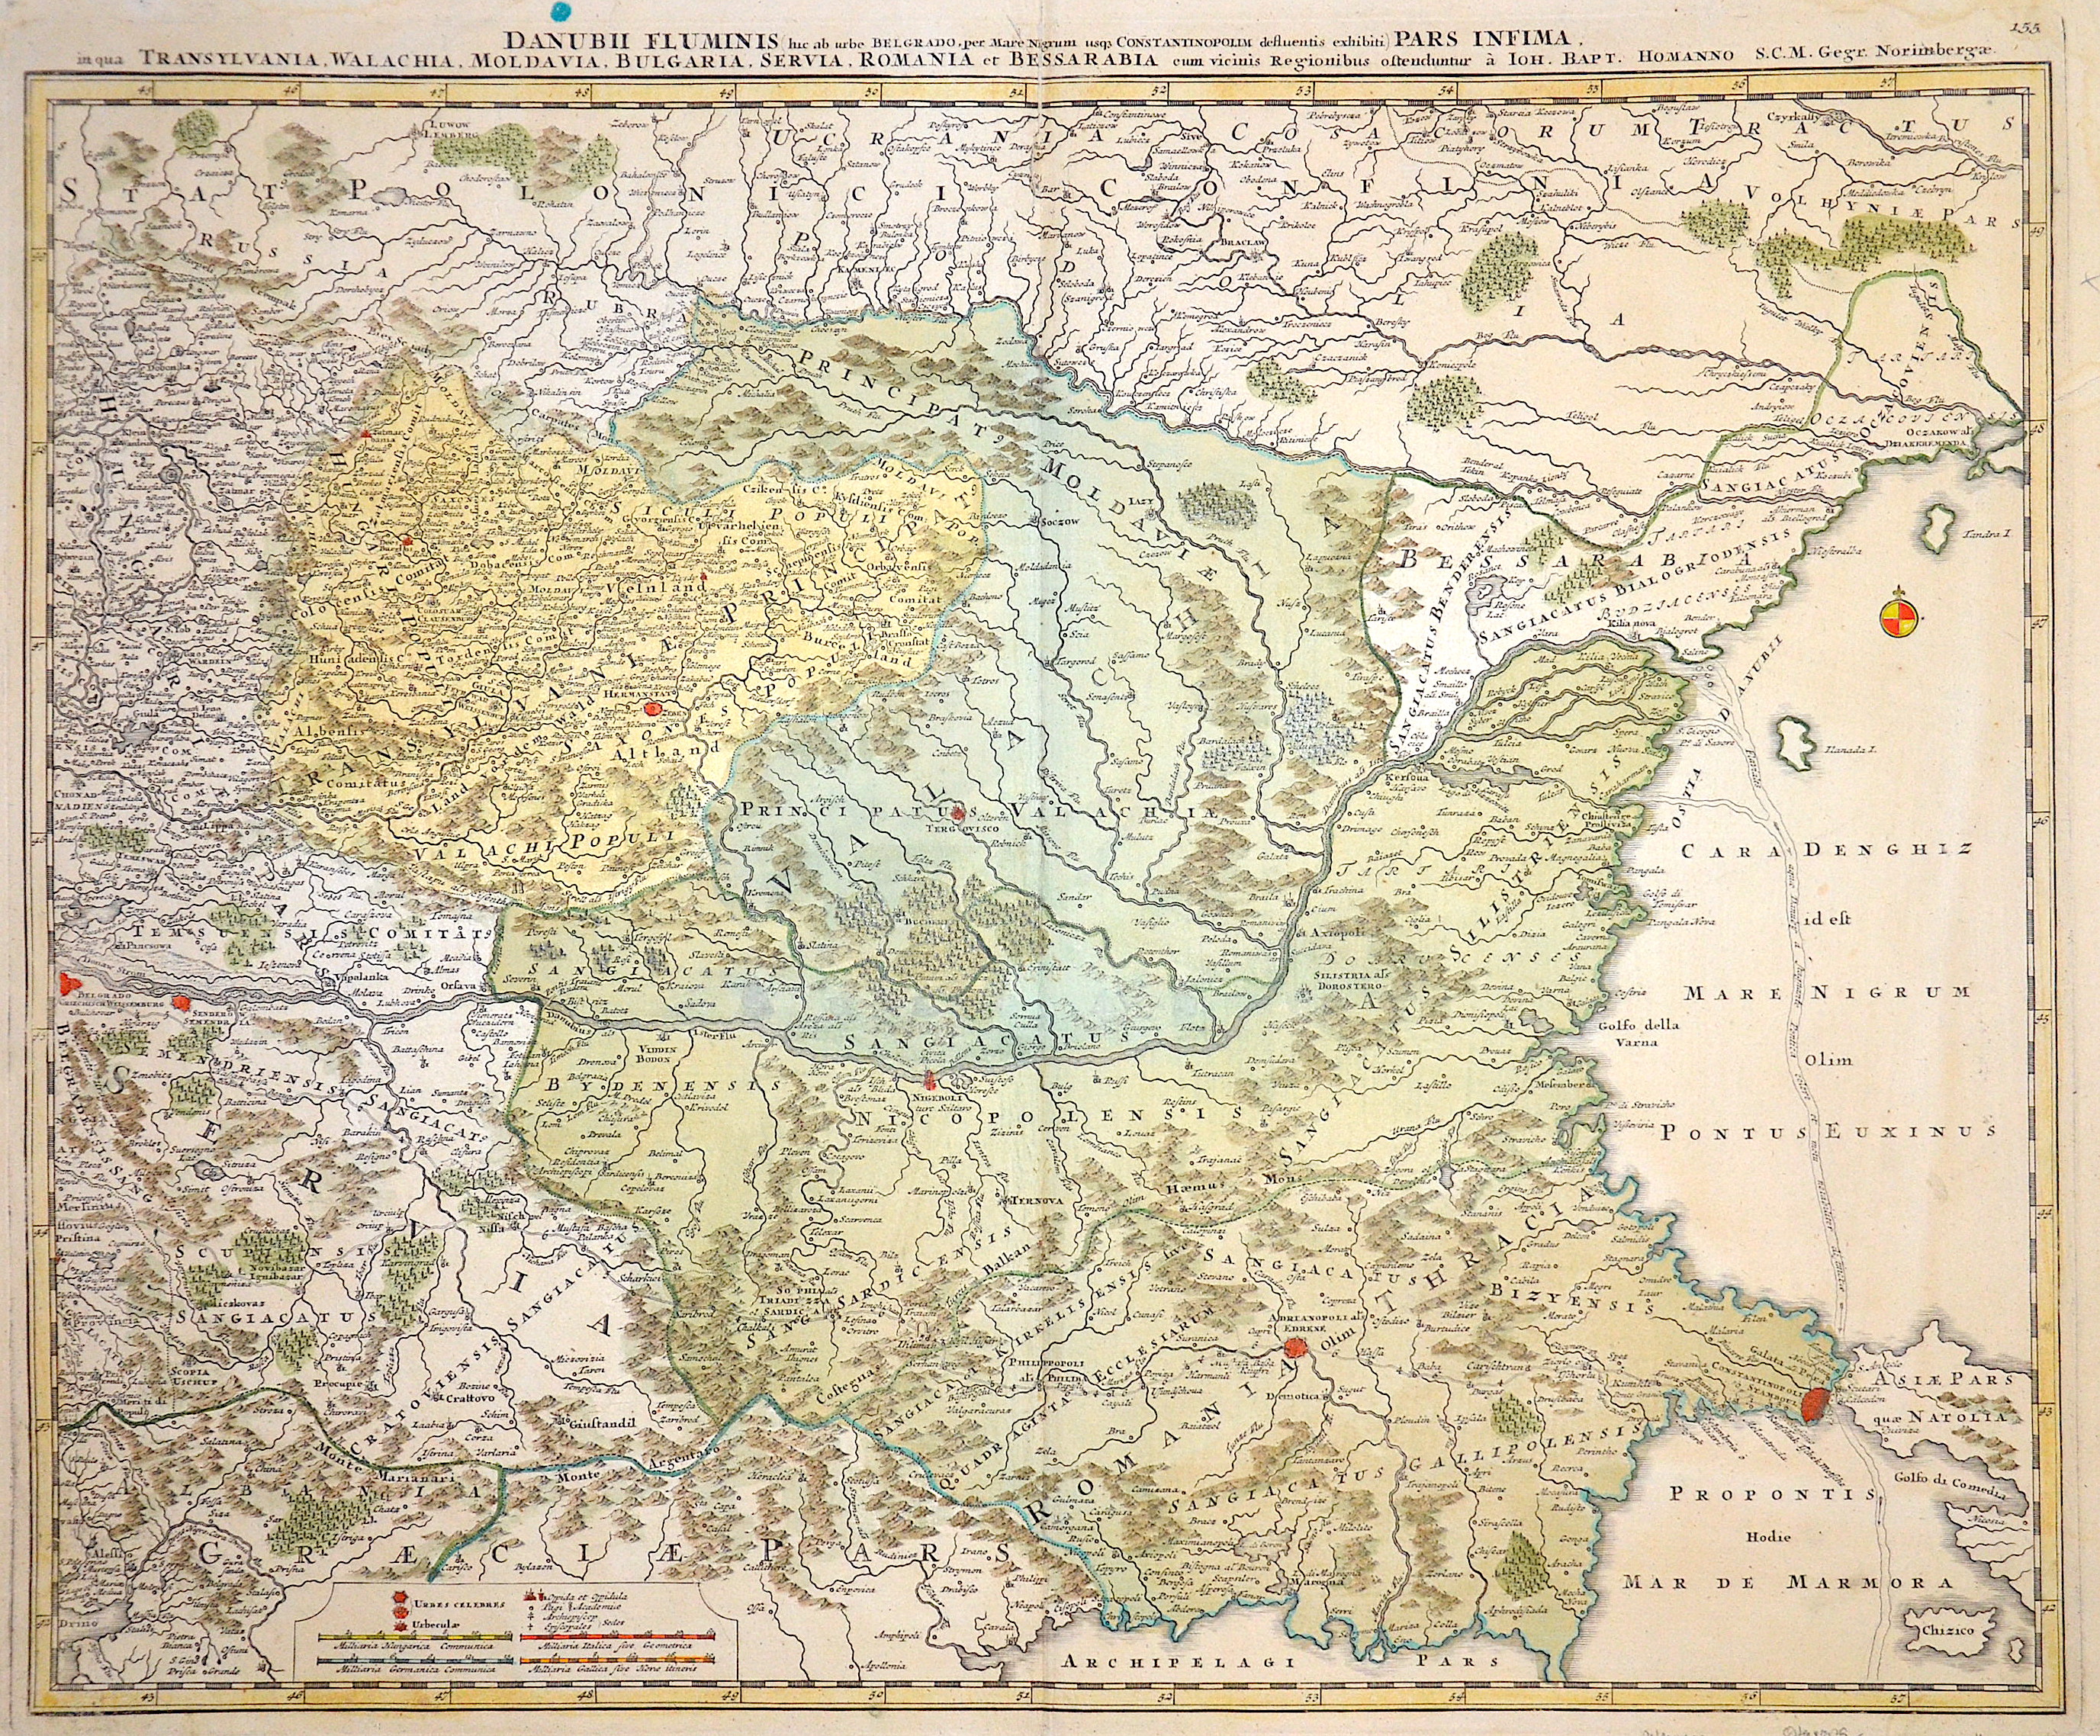 Homann Johann Babtiste Danubii Fluminis pars infima, in qua Transyvania, Wallachia, Moldavia, Bulgari, Servia, Romania et Bessarabia